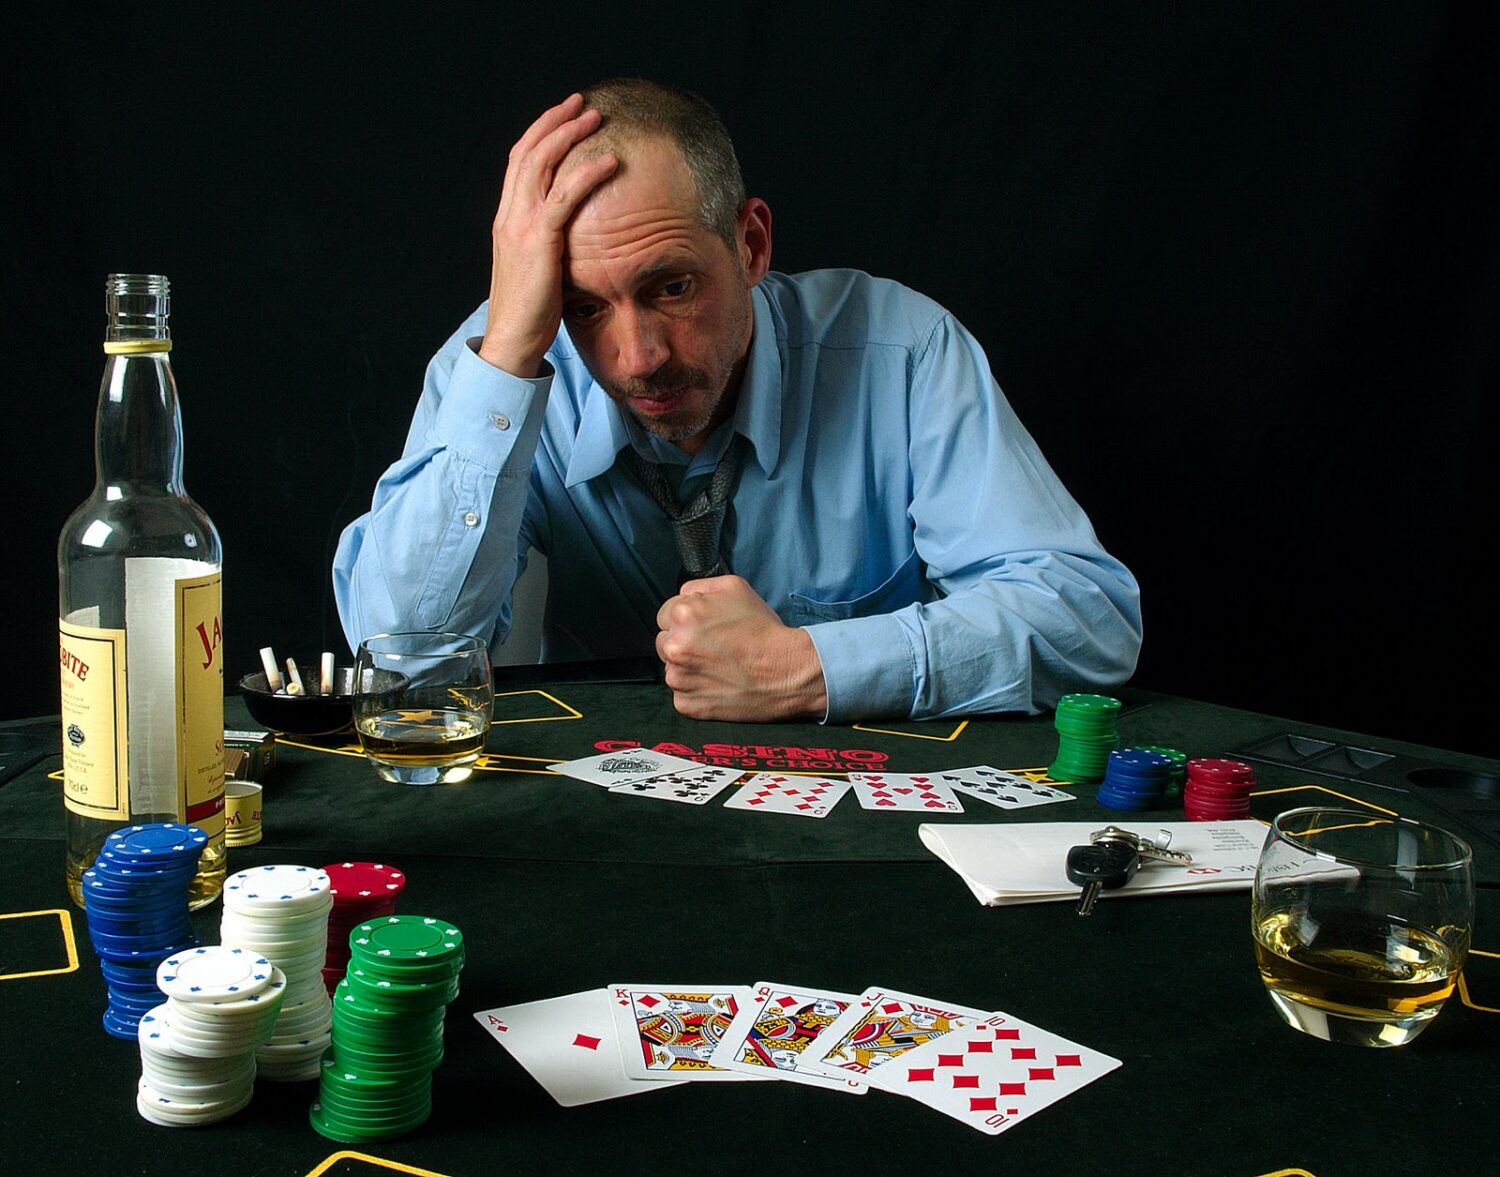 Bad Casino Habits